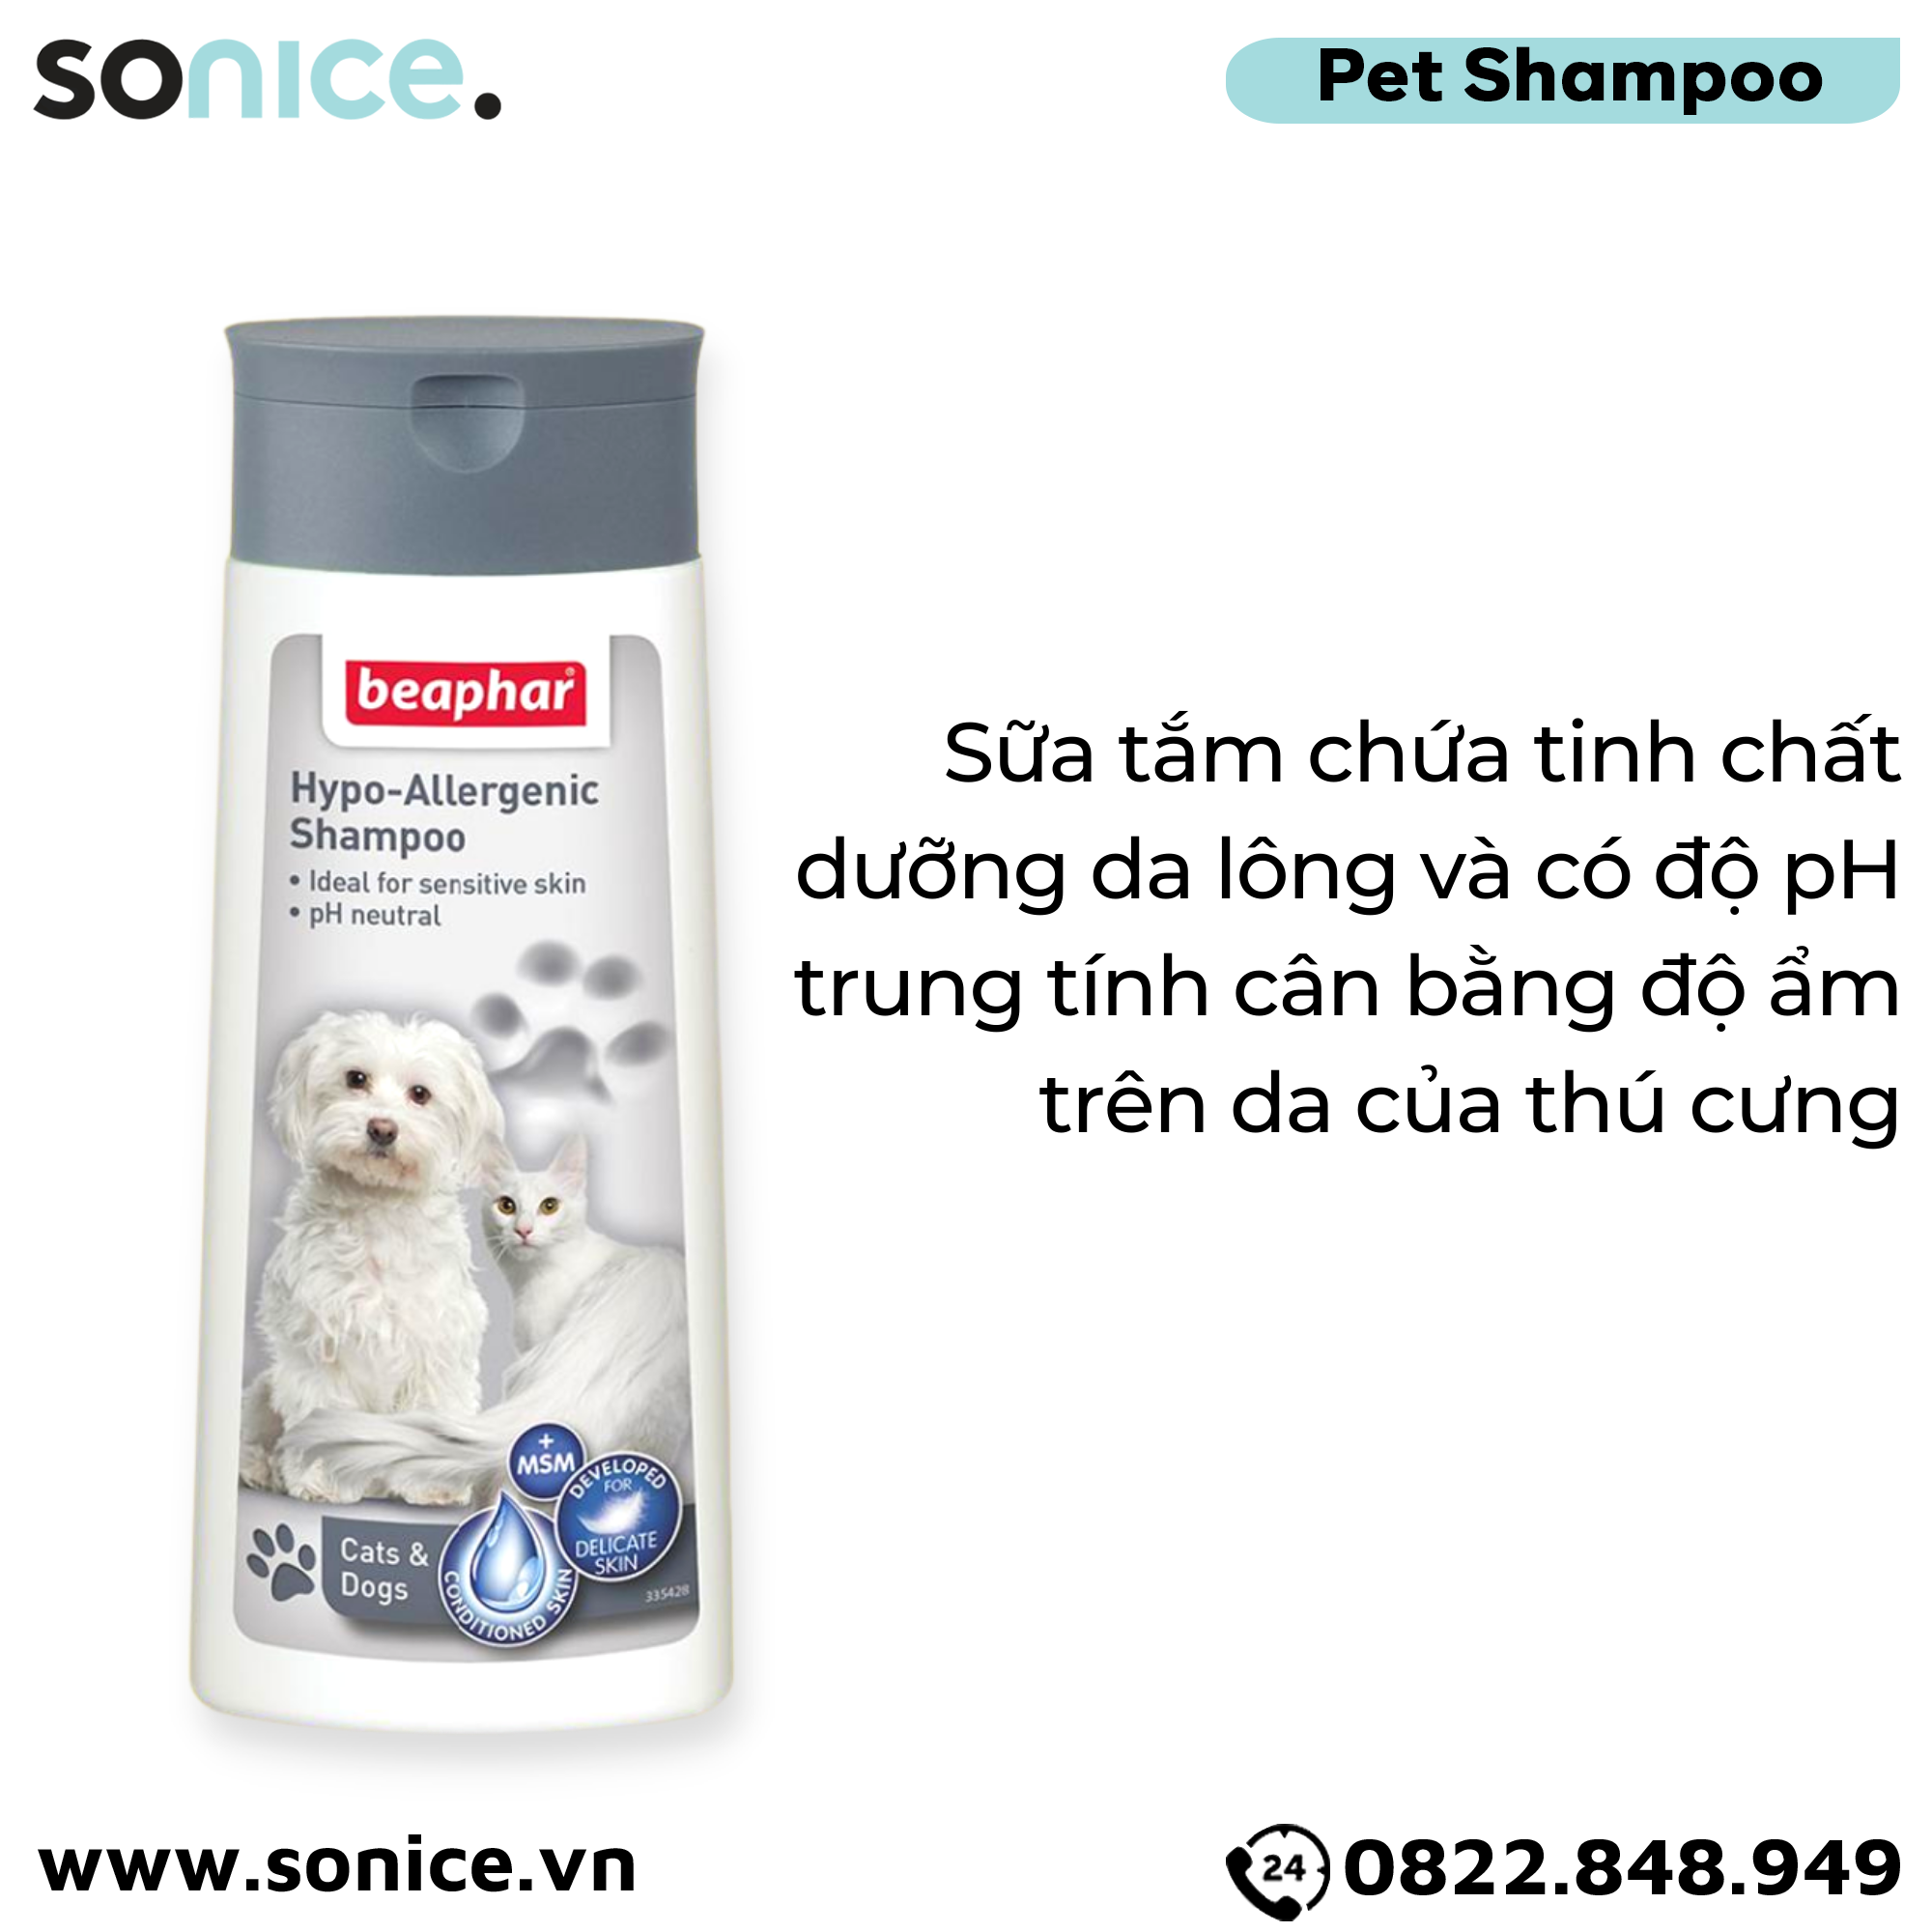  Sữa tắm BEAPHAR Hypo-Allergenic 250ml - dành cho da nhạy cảm SONICE. 